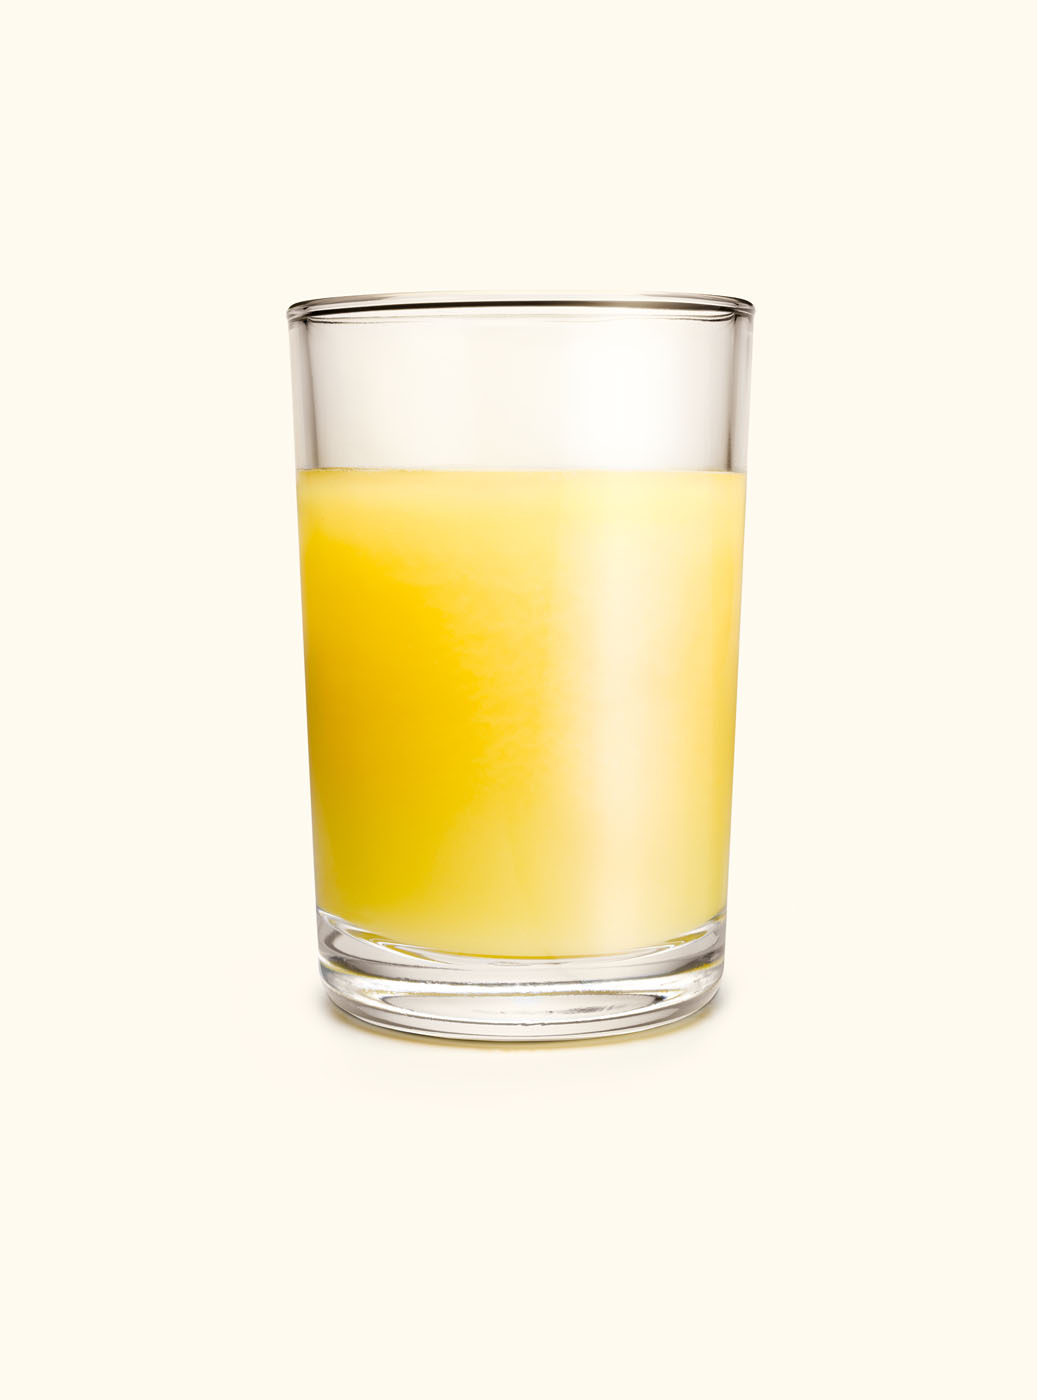 Orange fruit juice by Alexander Kent London based still life and product photographer.